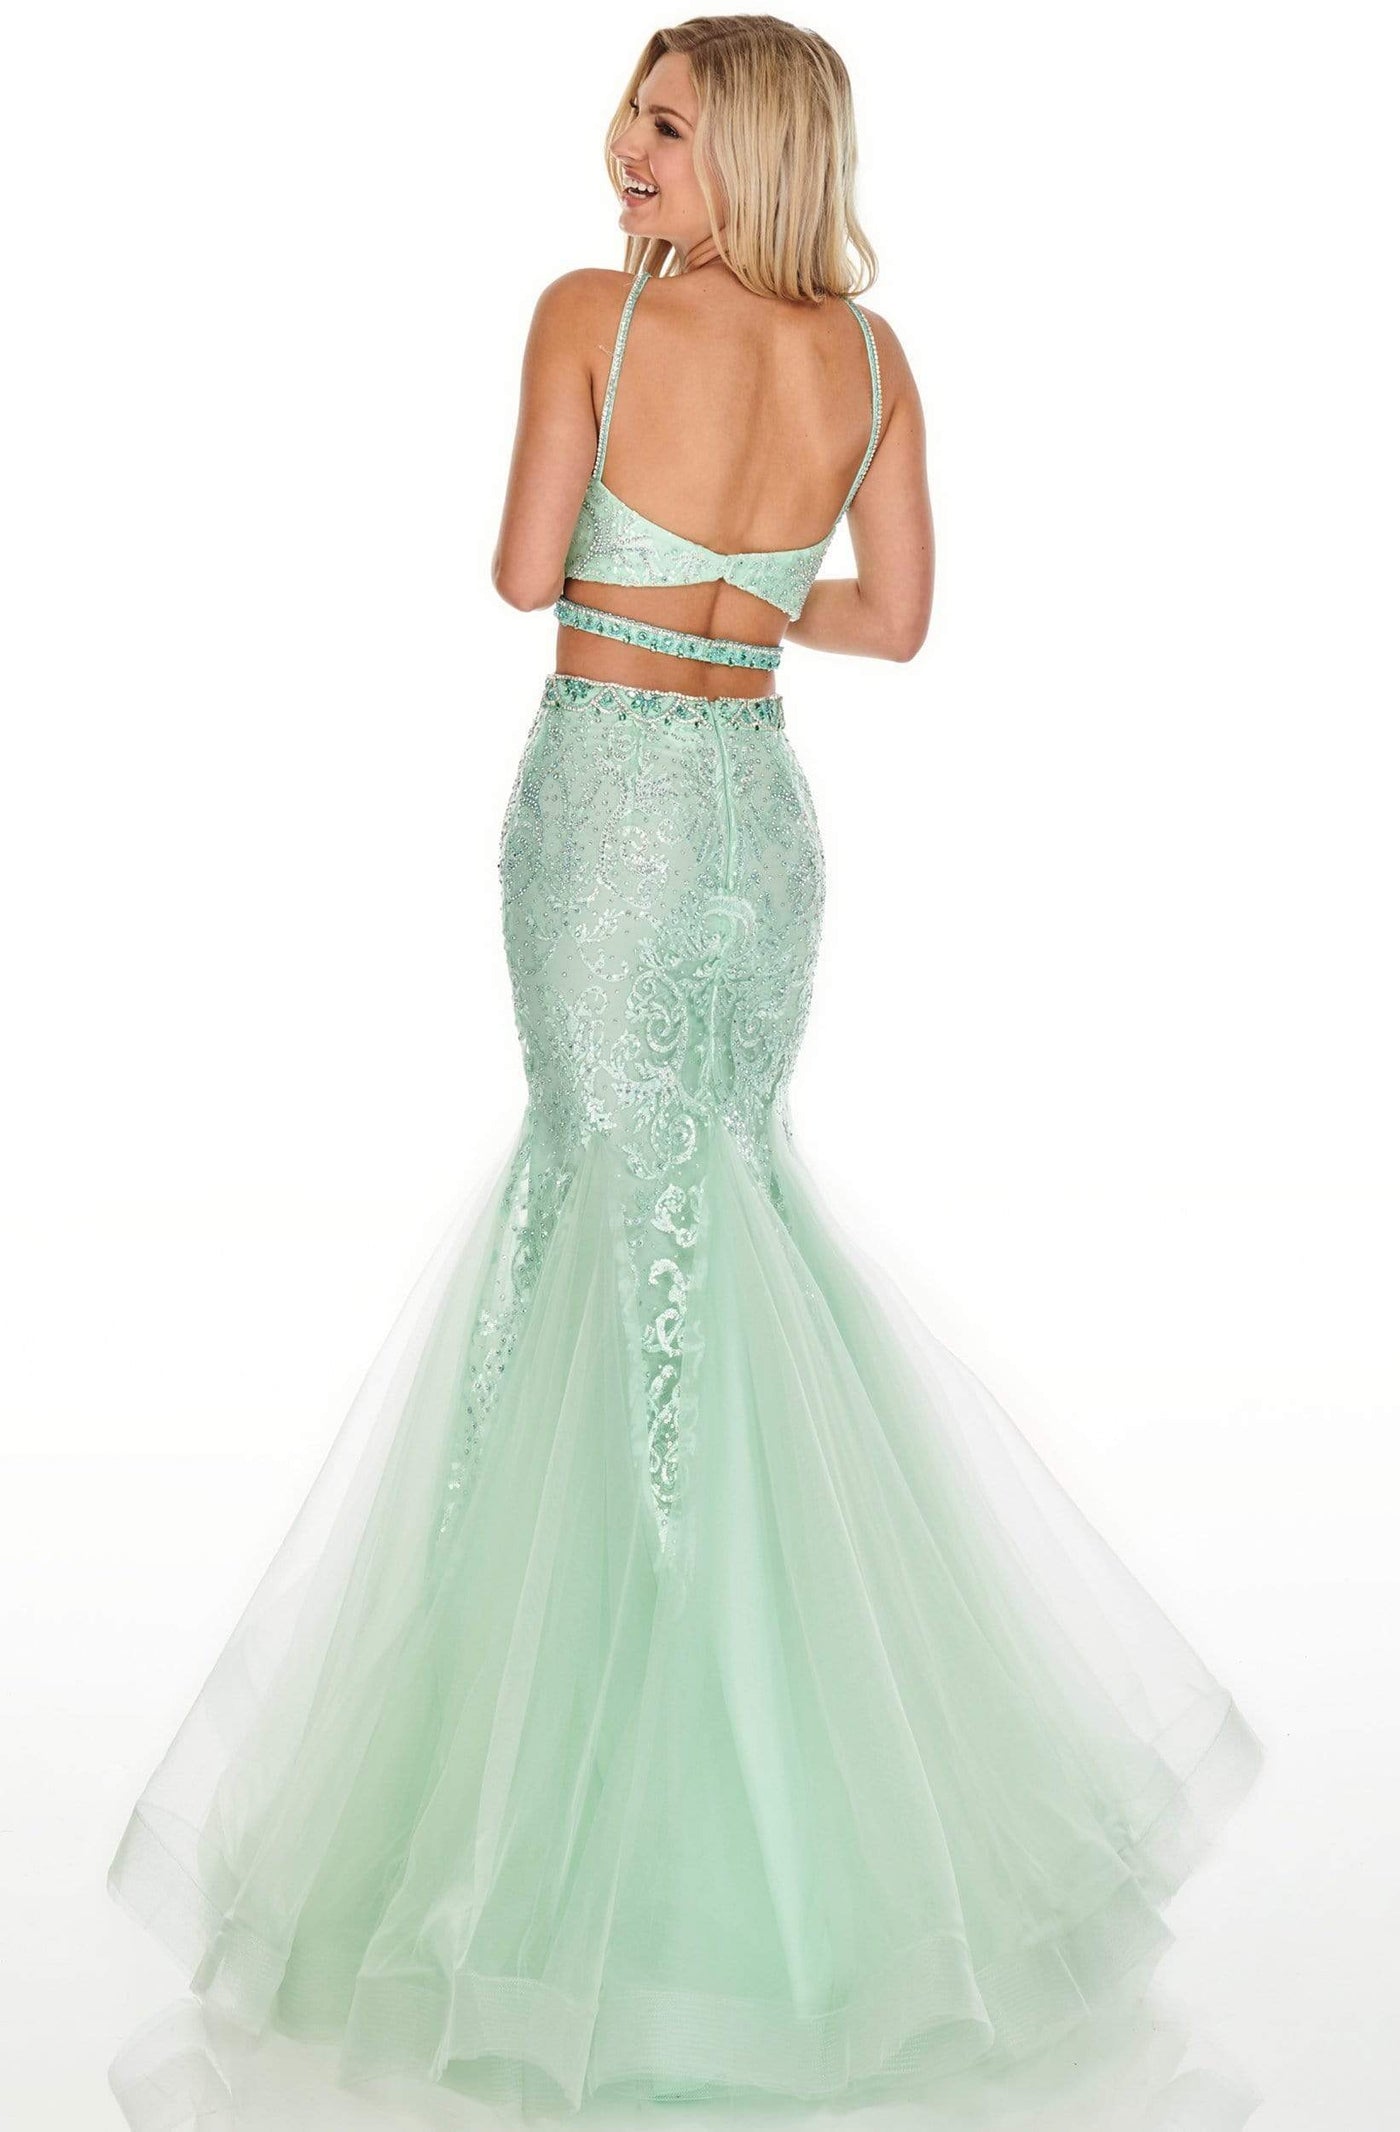 Rachel Allan Prom - 7057 Two Piece Embroidered Halter Mermaid Dress Prom Dresses